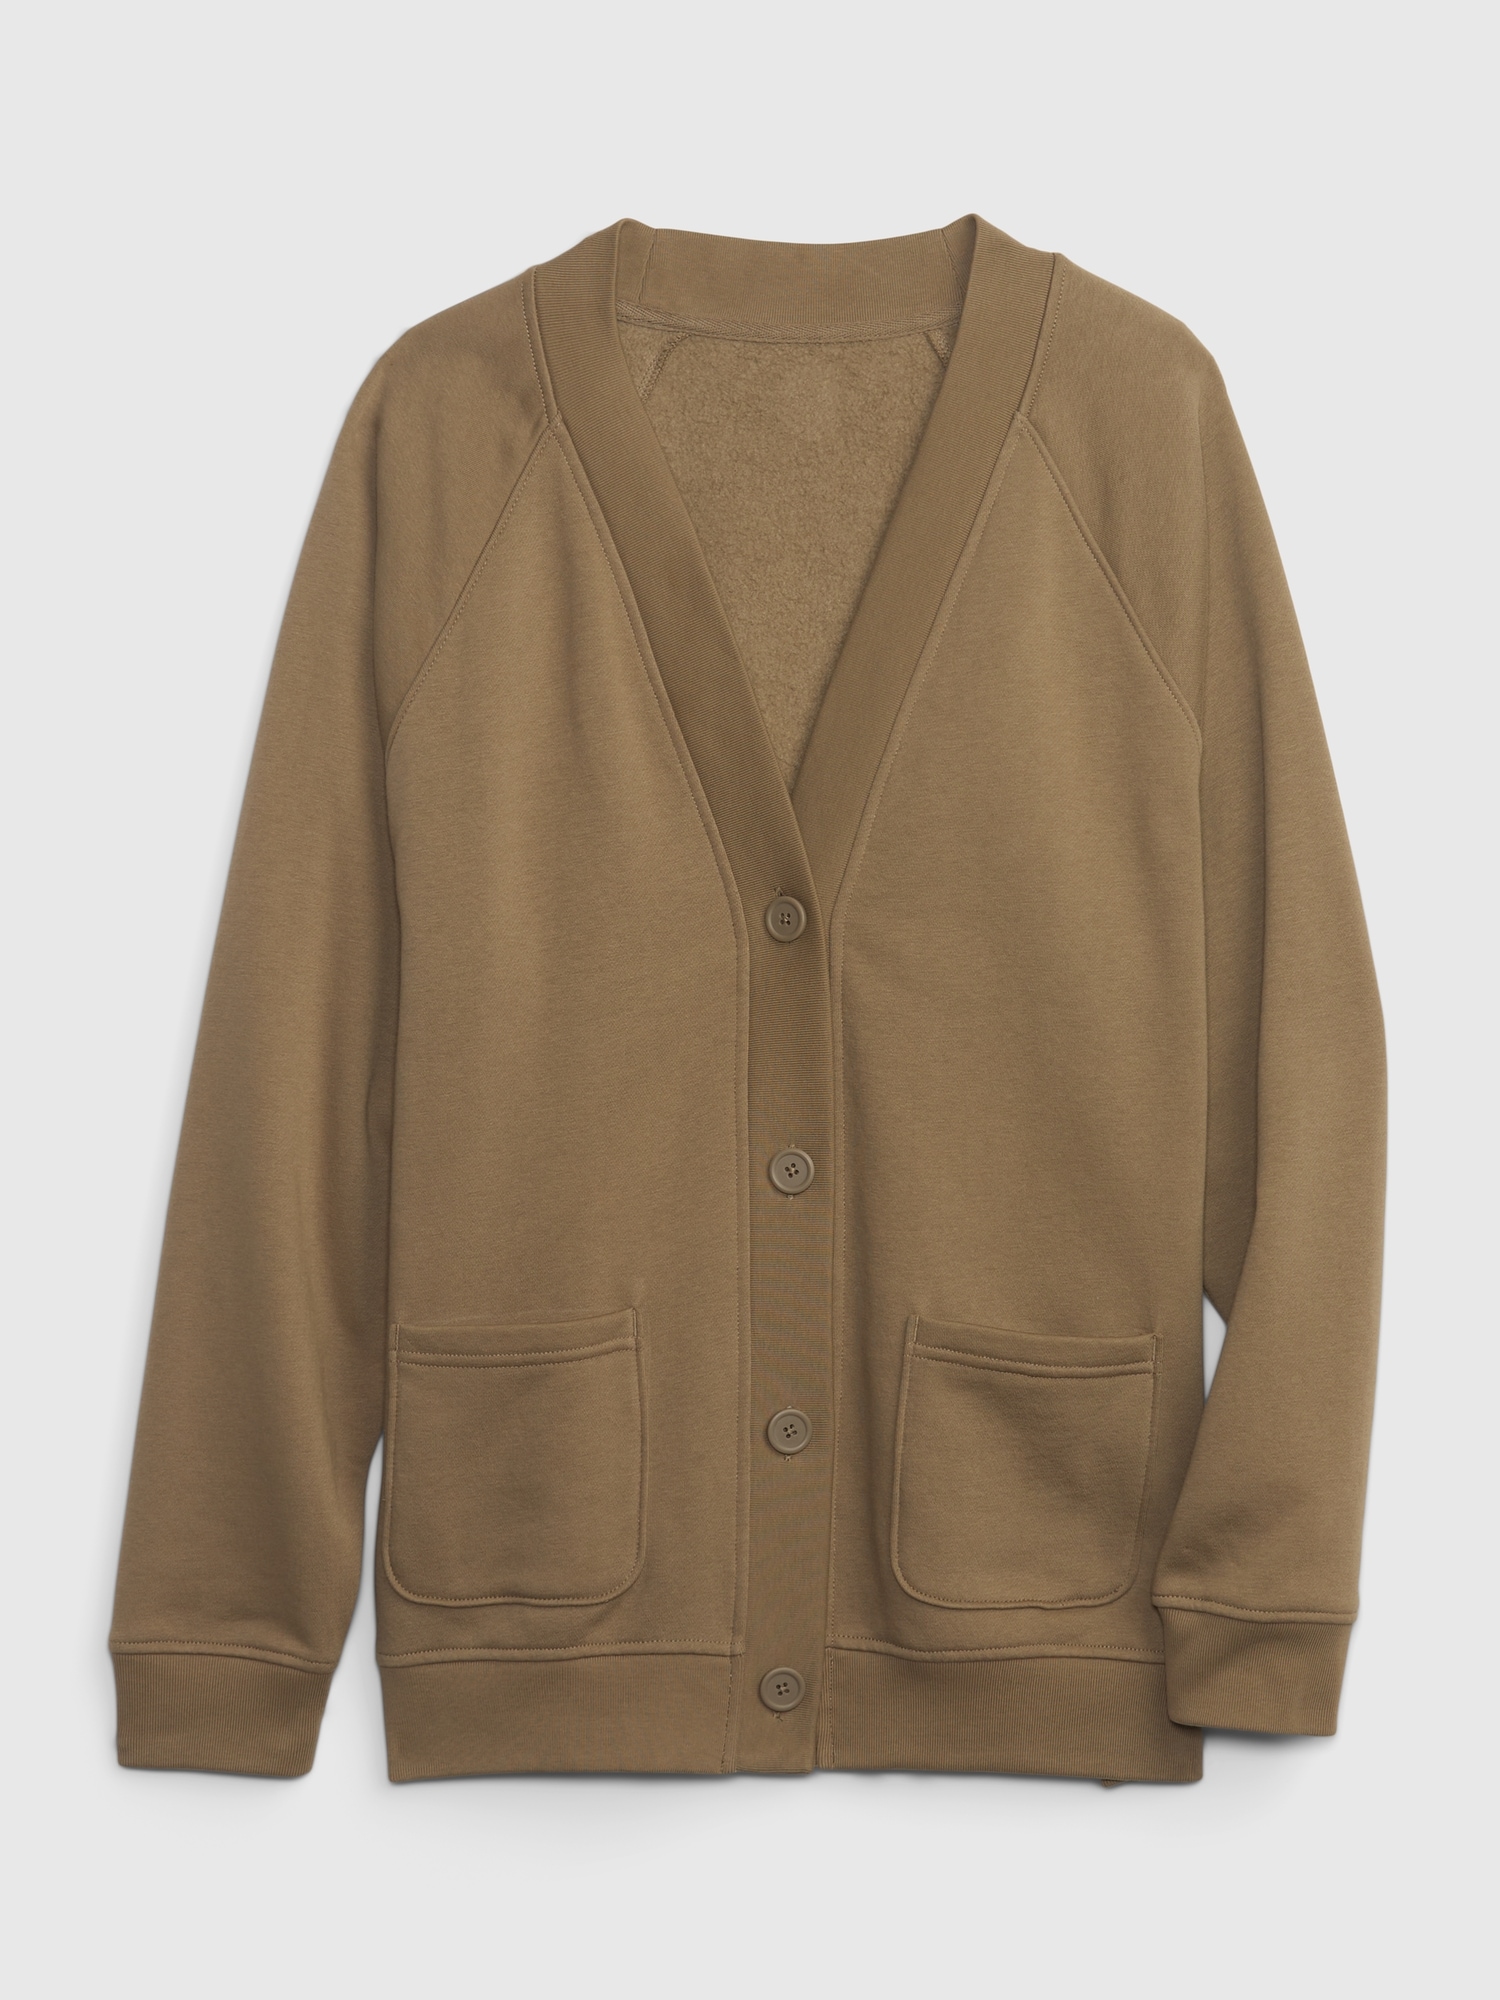 Vintage Soft Sweatshirt Cardigan | Gap